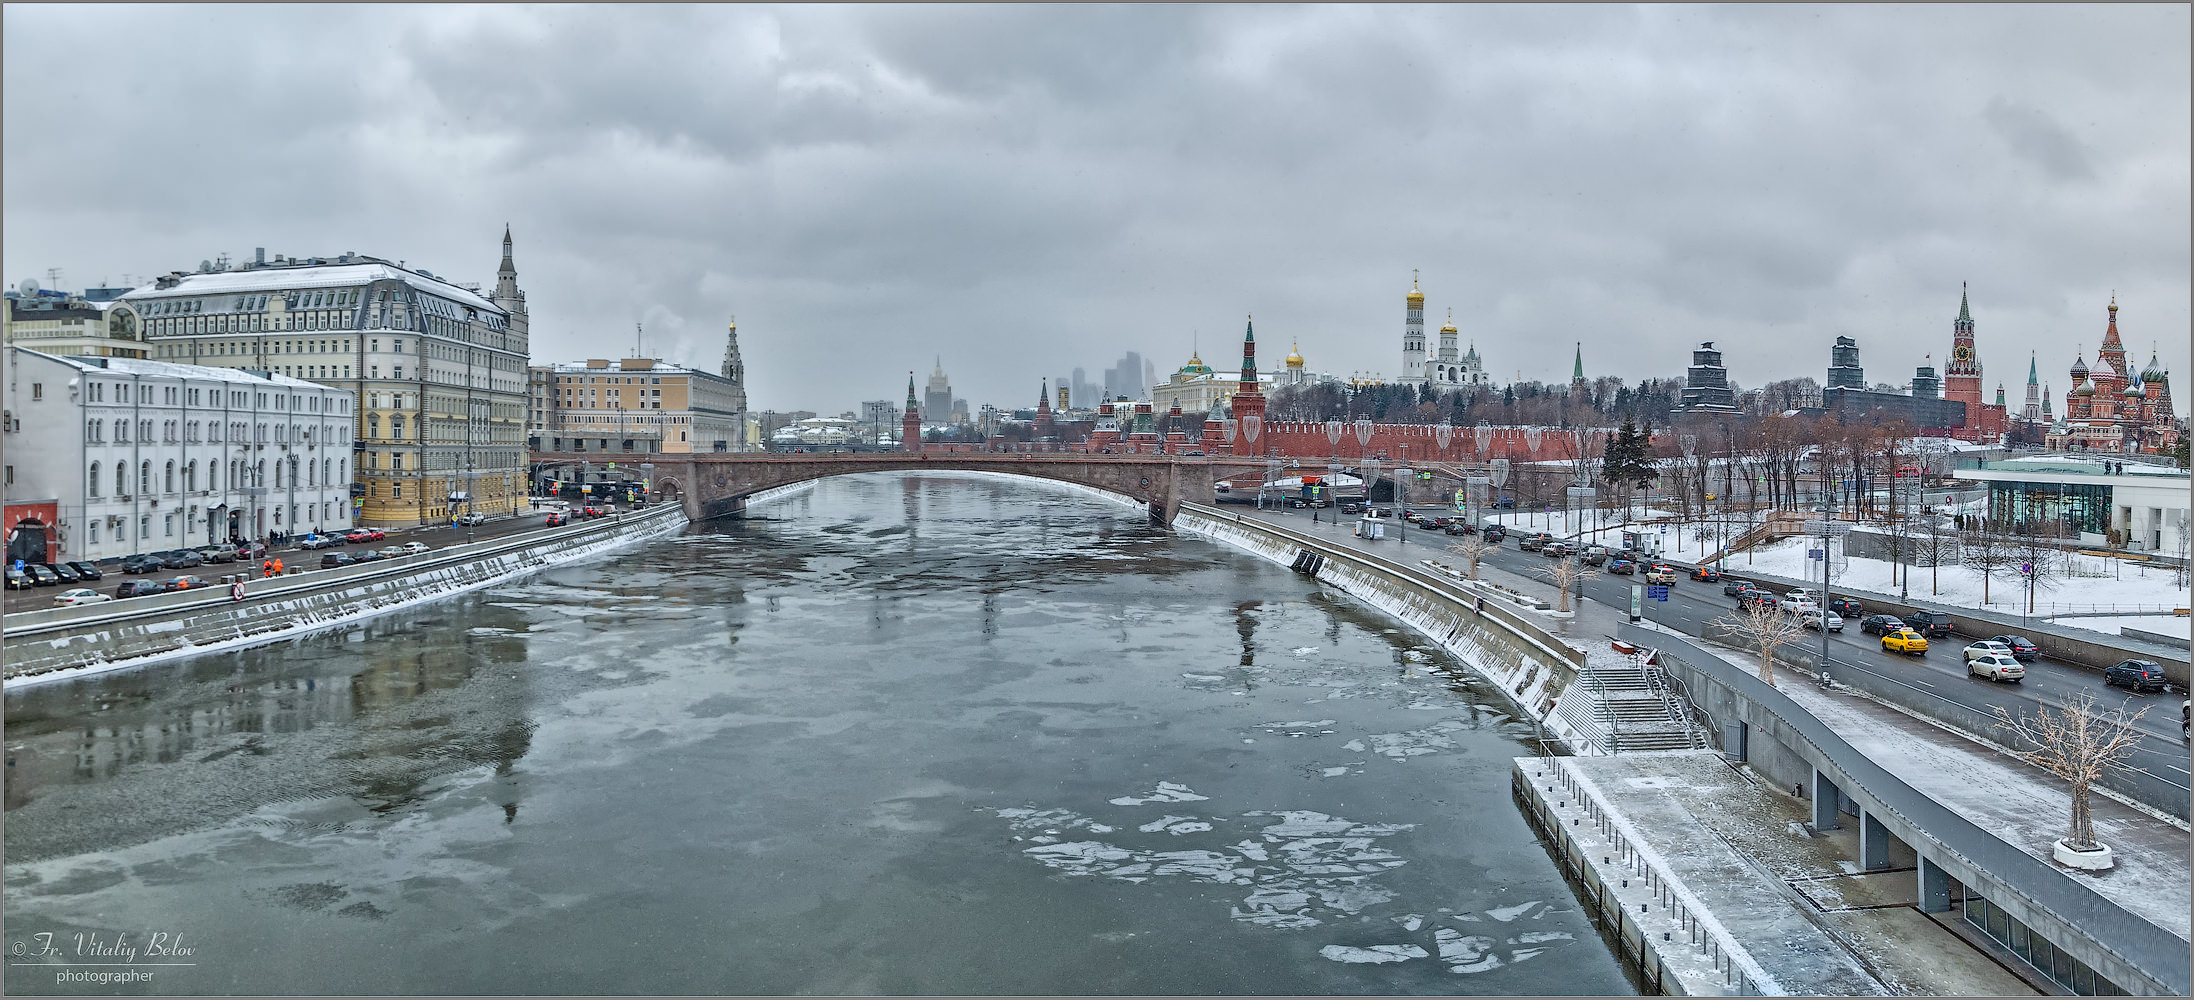 Панорама с видом на Кремль